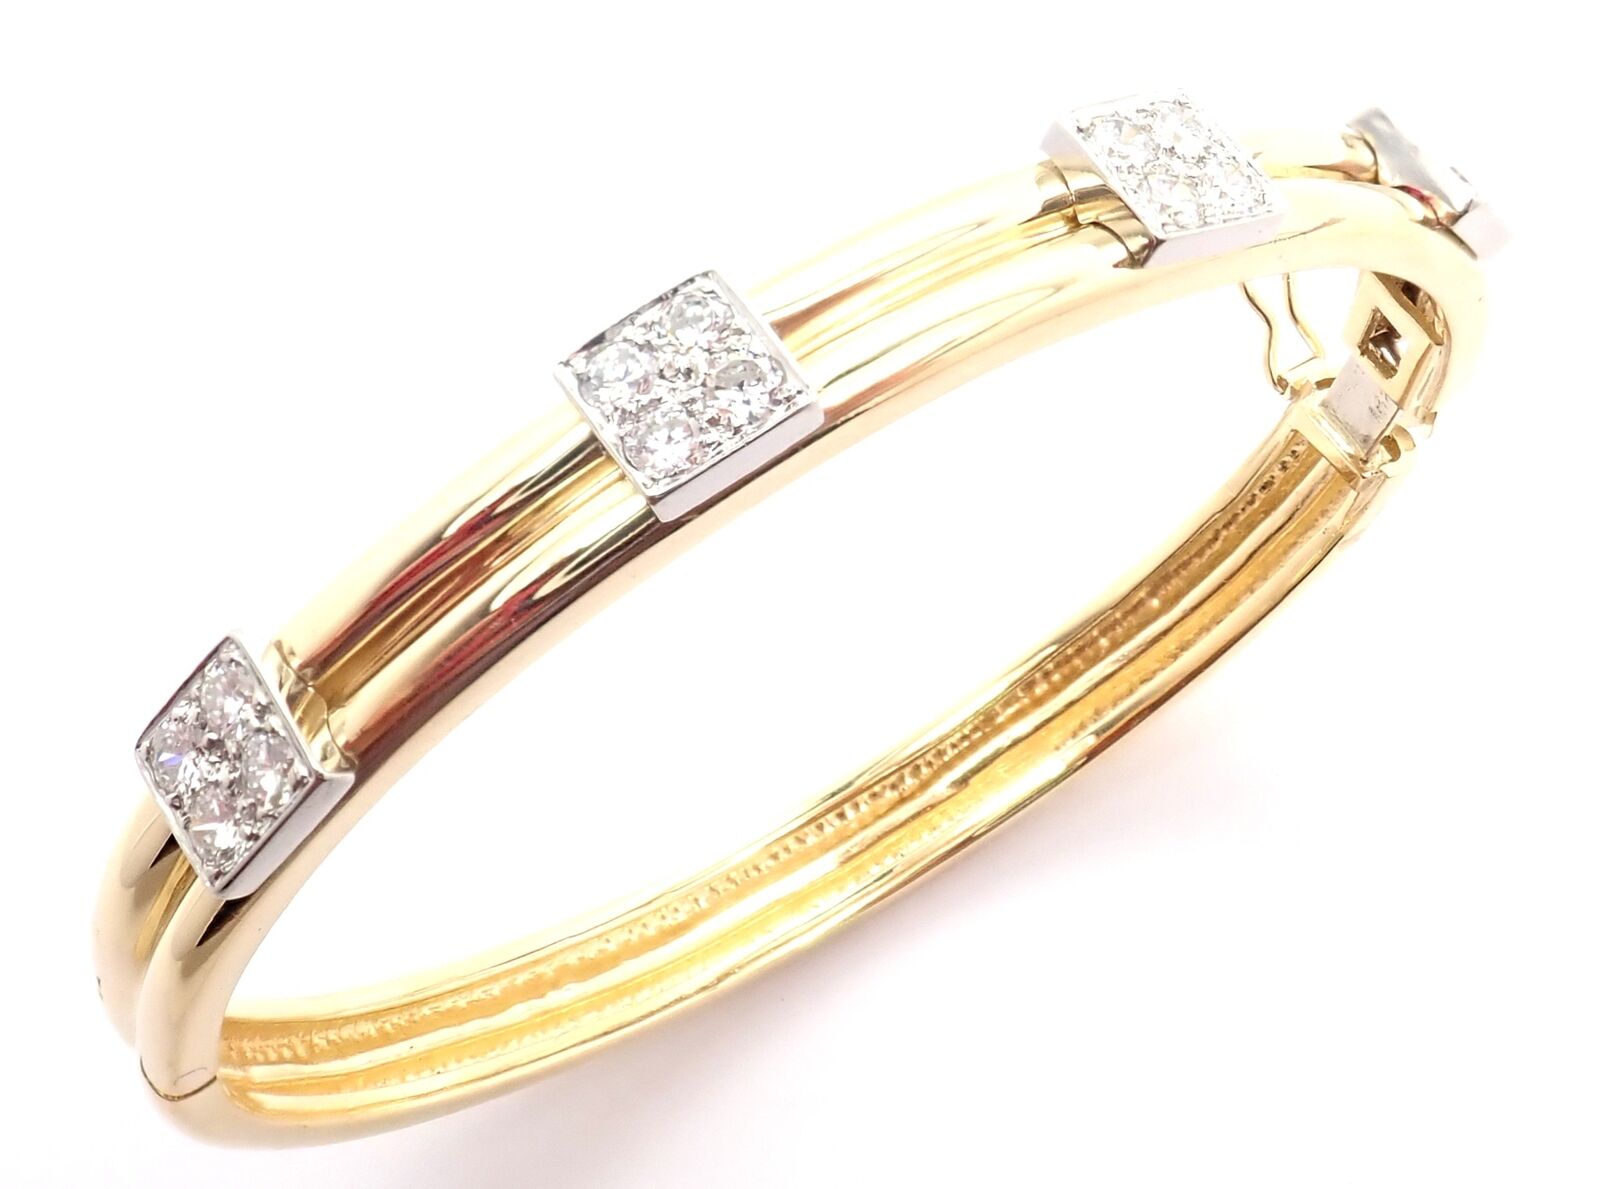 Rare! Vintage Authentic Tiffany & Co 18K Yellow Gold Diamond Bangle Bracelet